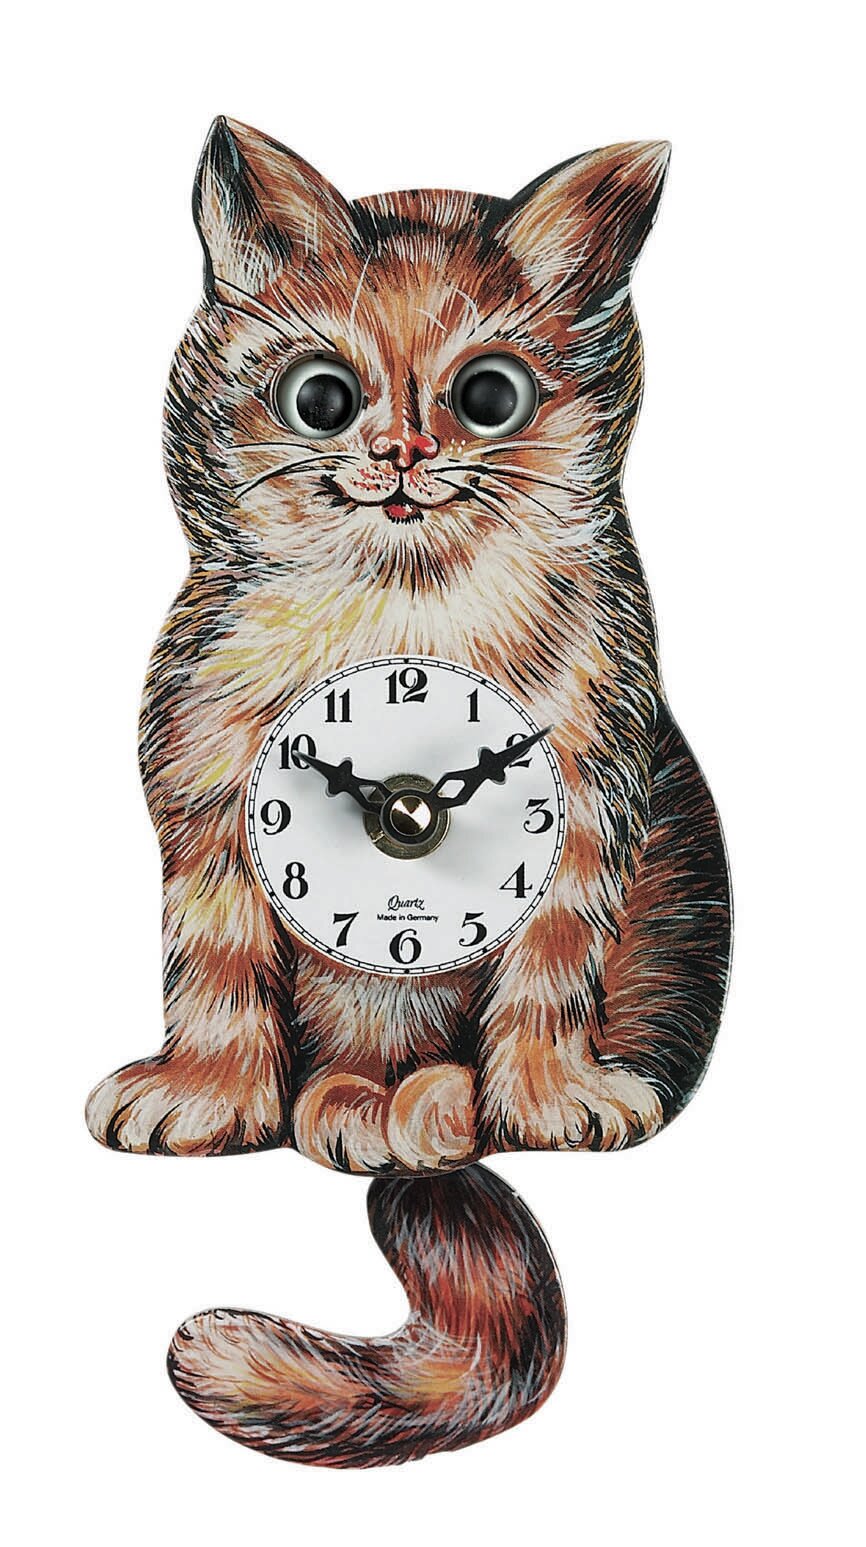 Cat Wall Decorations - Moving Eyes Cat Wall Clock